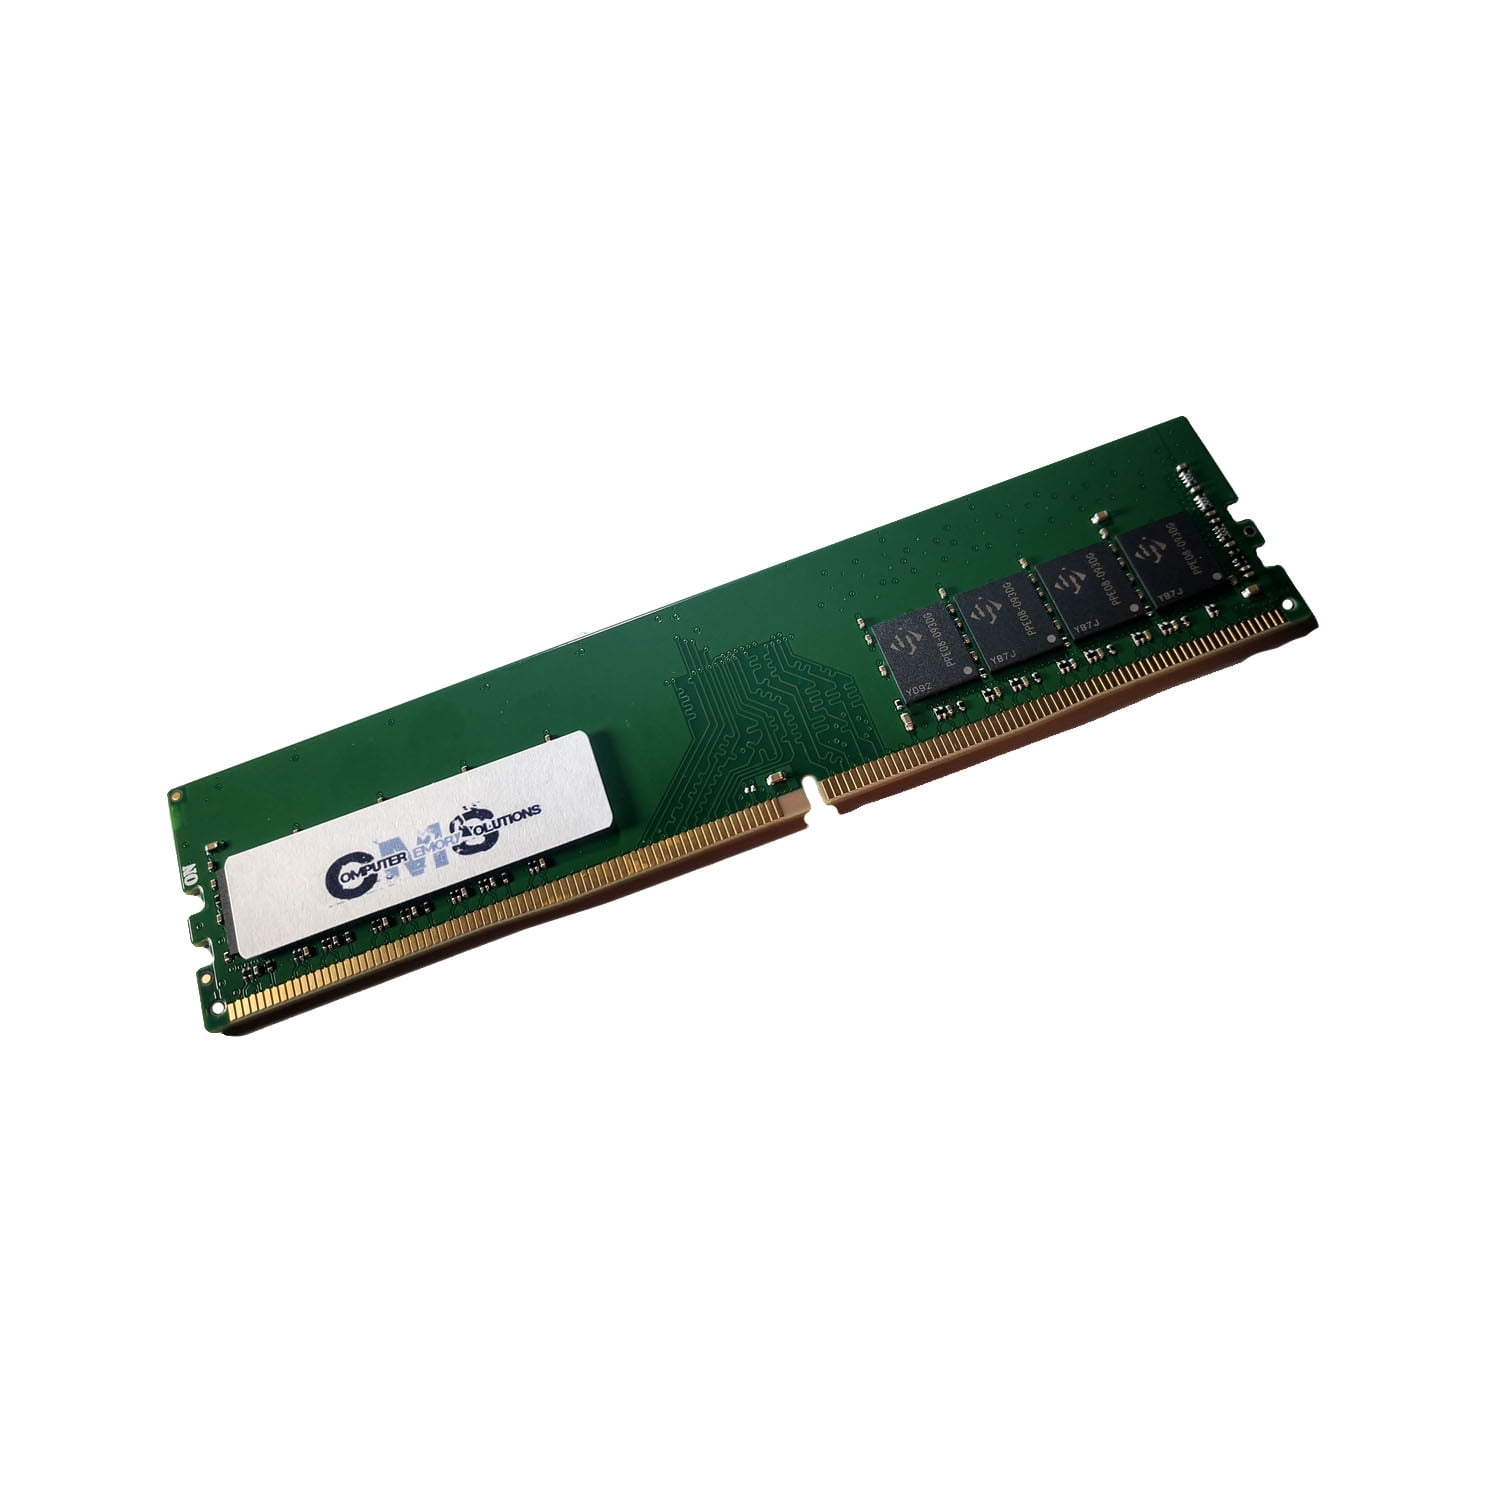 CMS 4GB (1X4GB) DDR4 19200 2400MHZ NON ECC DIMM Memory Ram Compatible with  Gigabyte GA-B250M-D3H, GA-B250M-DS3H, GA-B250M-Gaming 3, GA-B250M-Gaming 5  